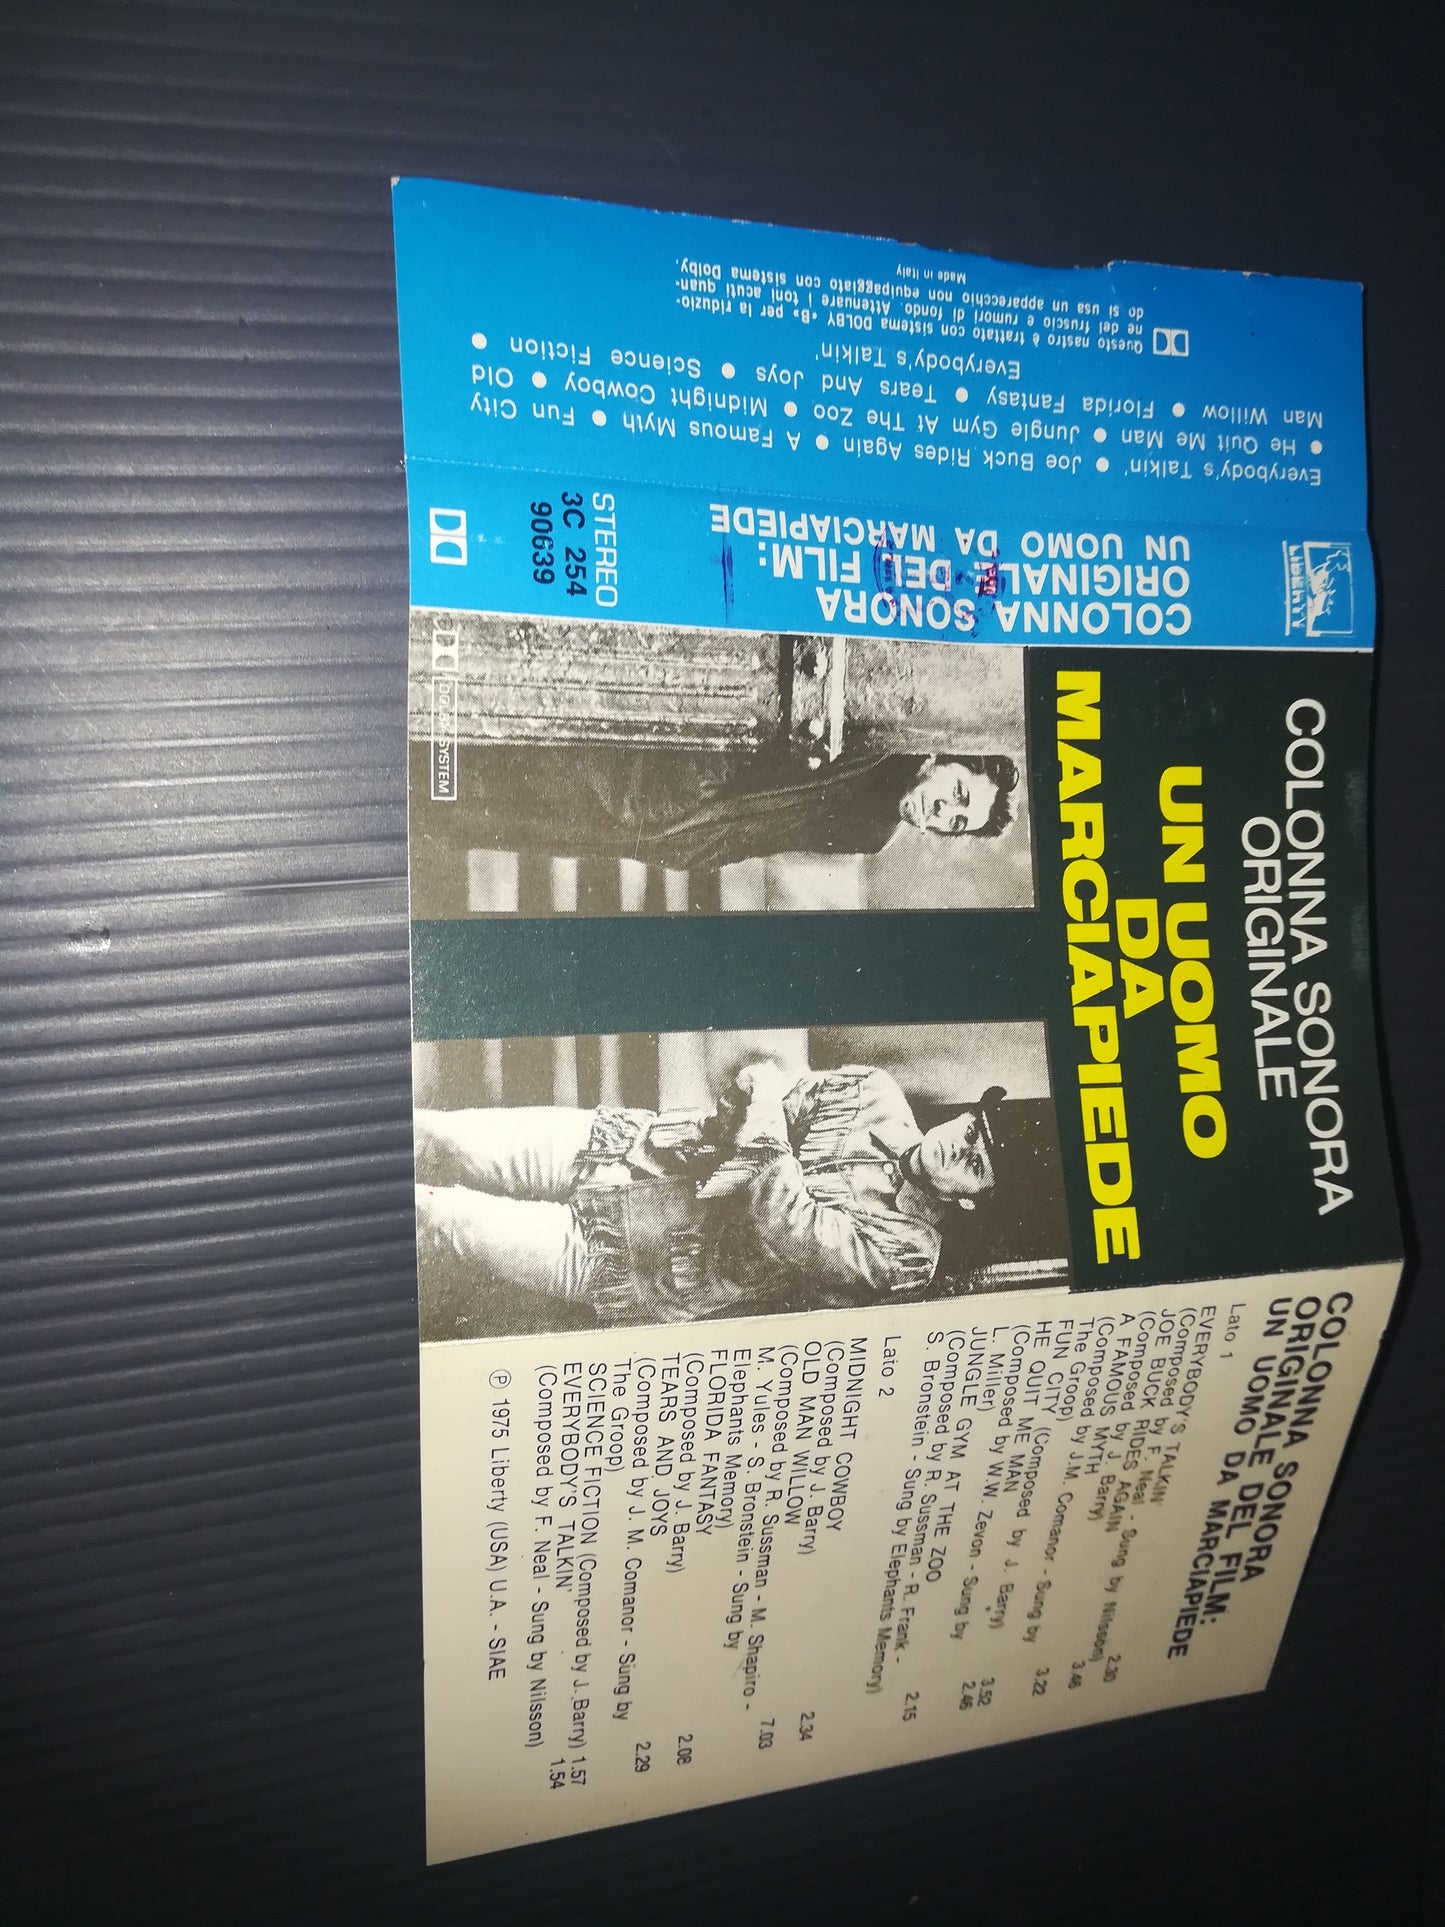 A Sidewalk Man" Original Soundtrack Music Cassette